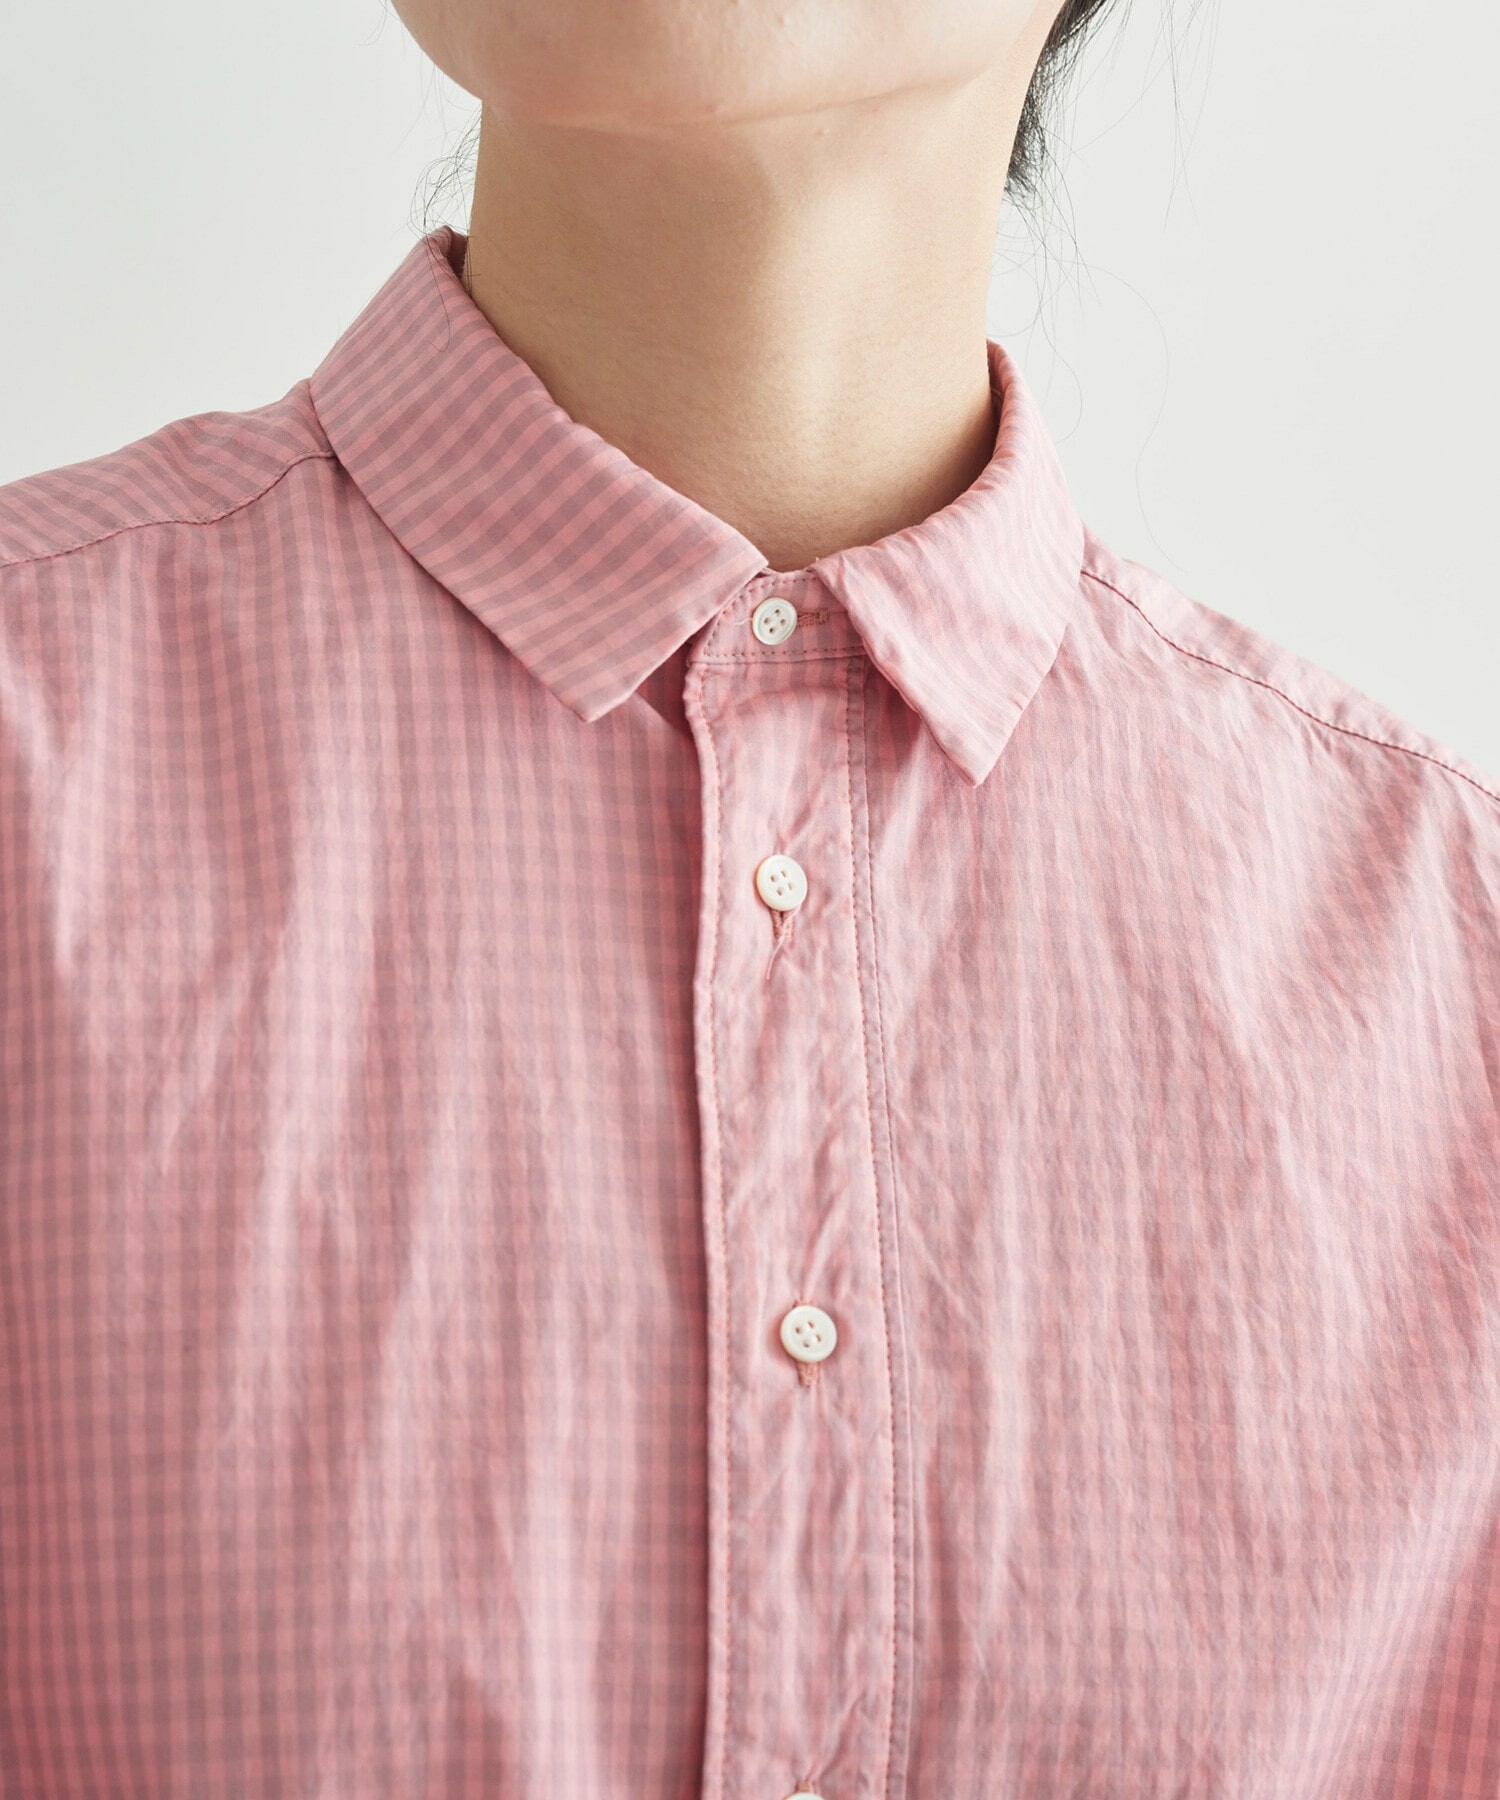 Ambidex Store 予約販売 ギンガムチェック セミワイドカラーシャツ F ピンク Iki